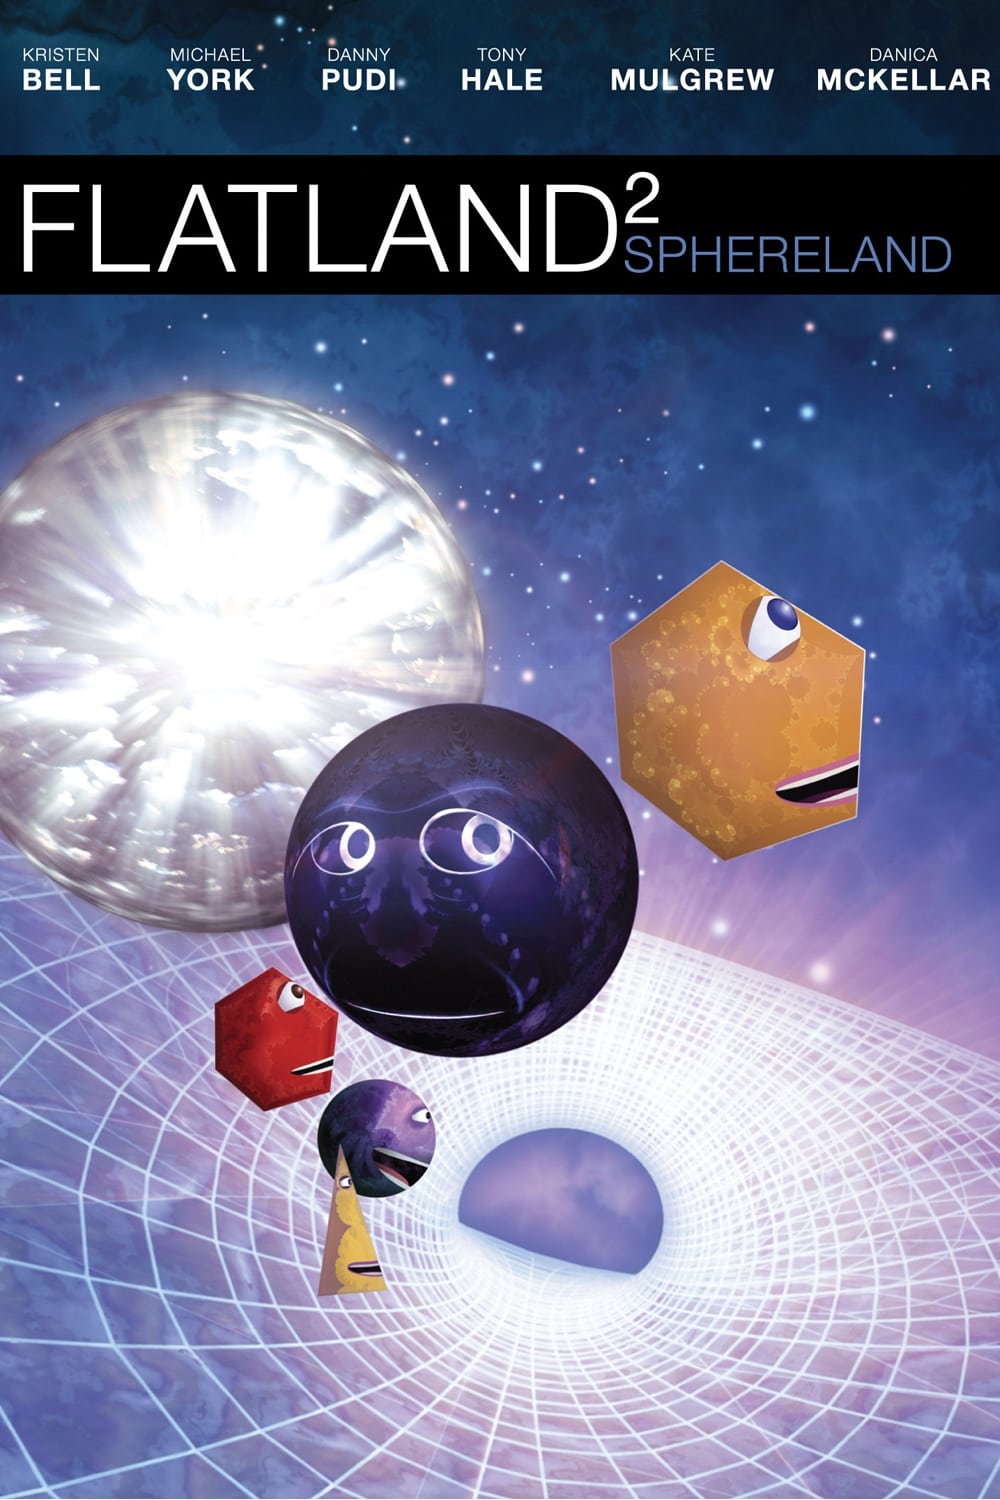 Flatland²: Sphereland film